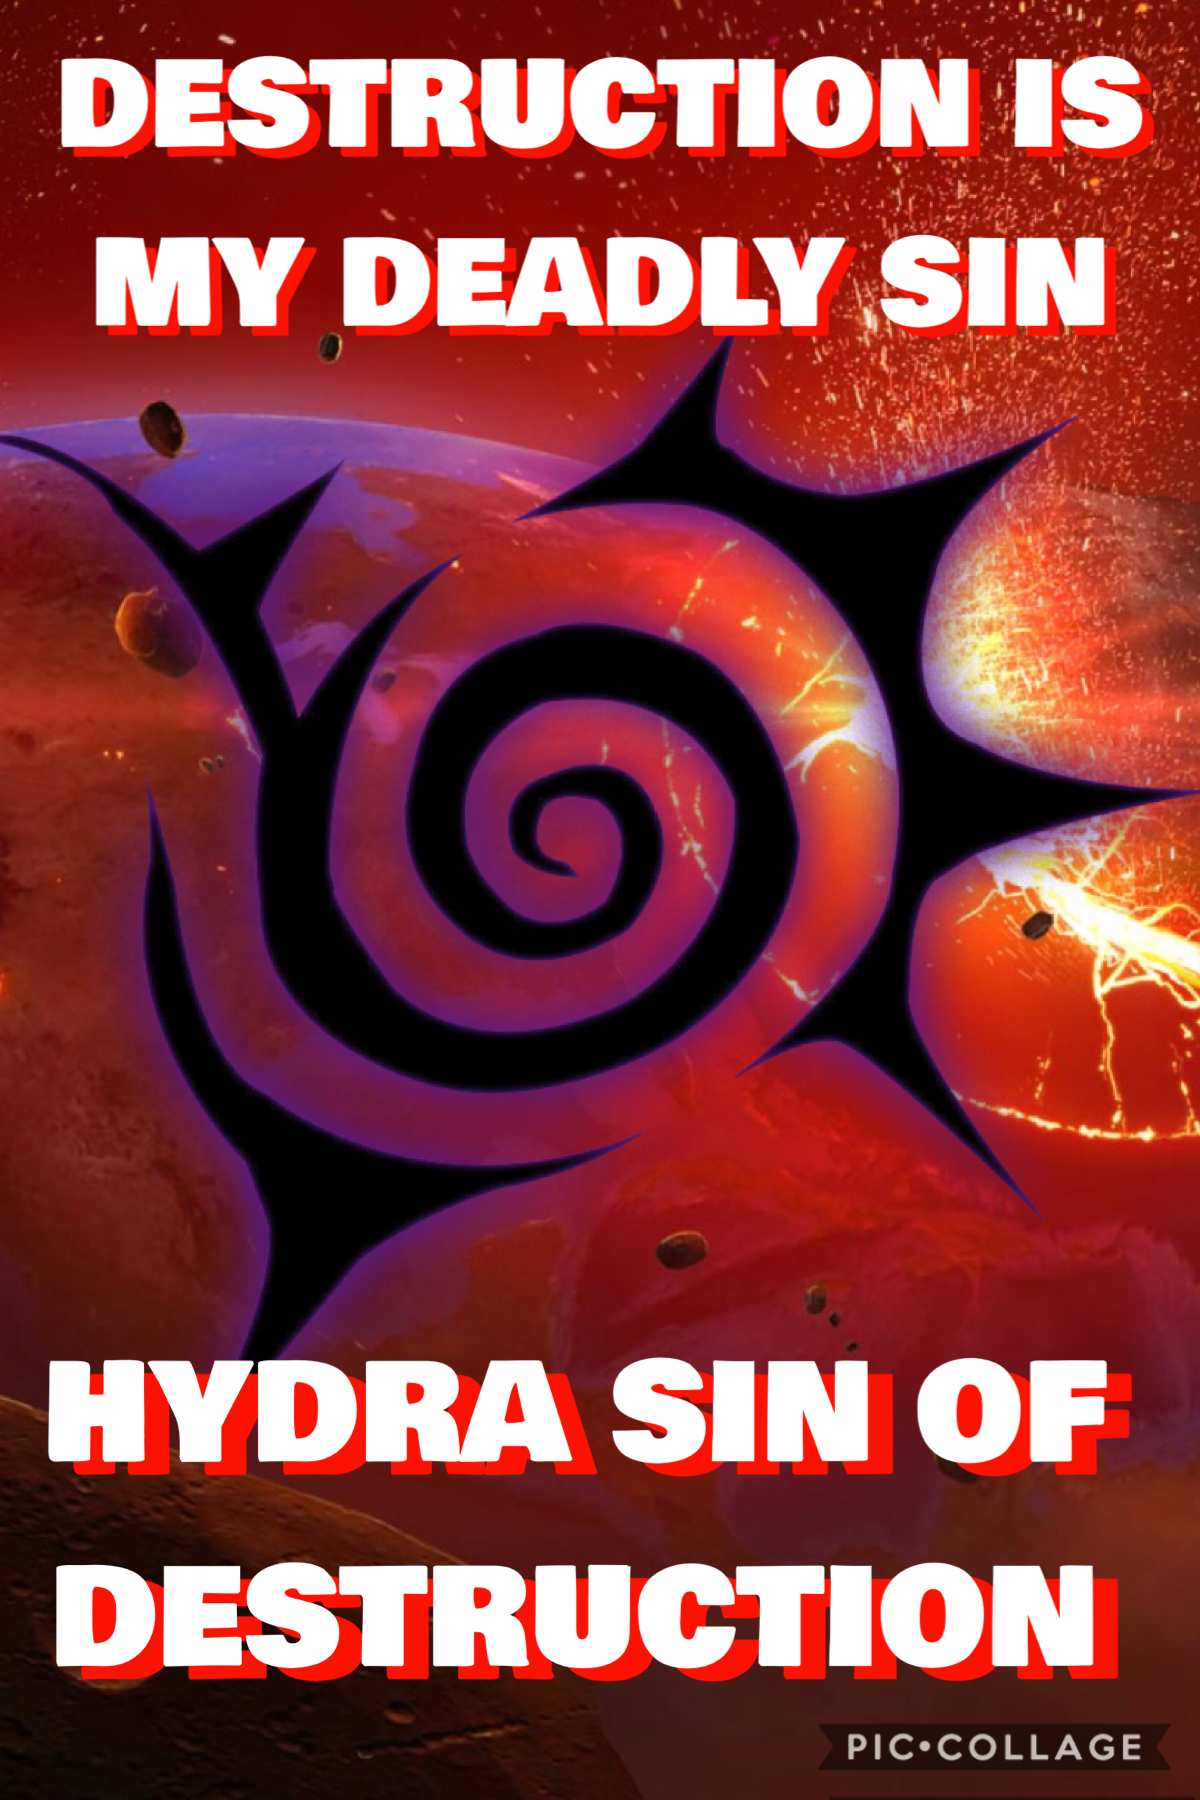 HYDRA SIN OF DESTRUCTION